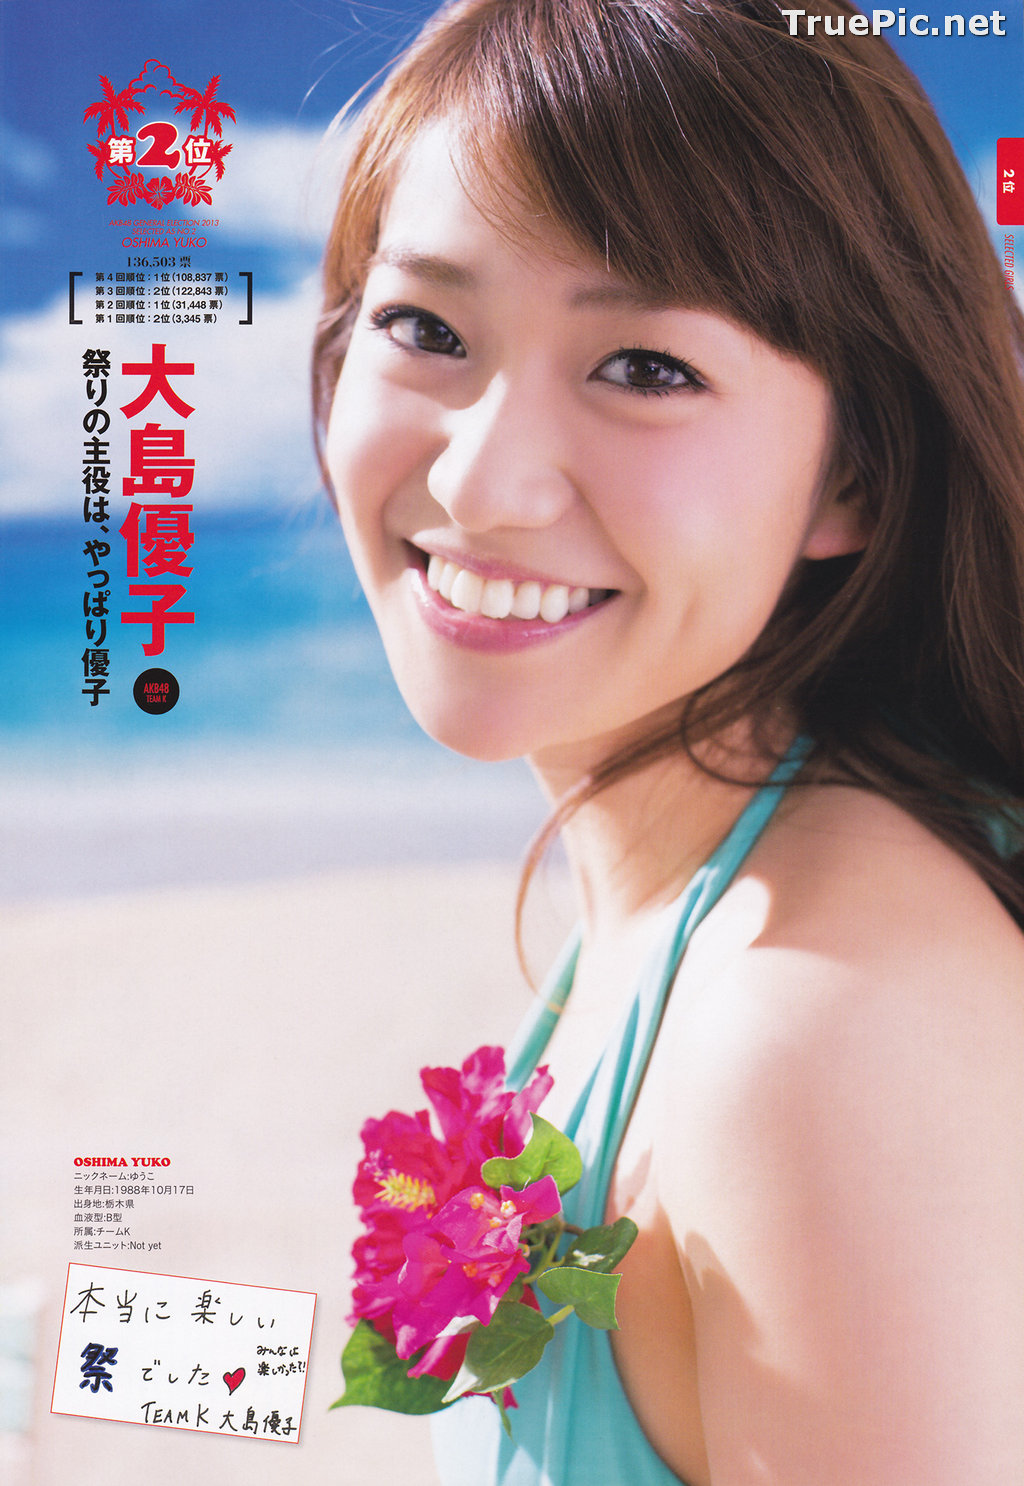 Image AKB48 General Election! Swimsuit Surprise Announcement 2013 - TruePic.net - Picture-17